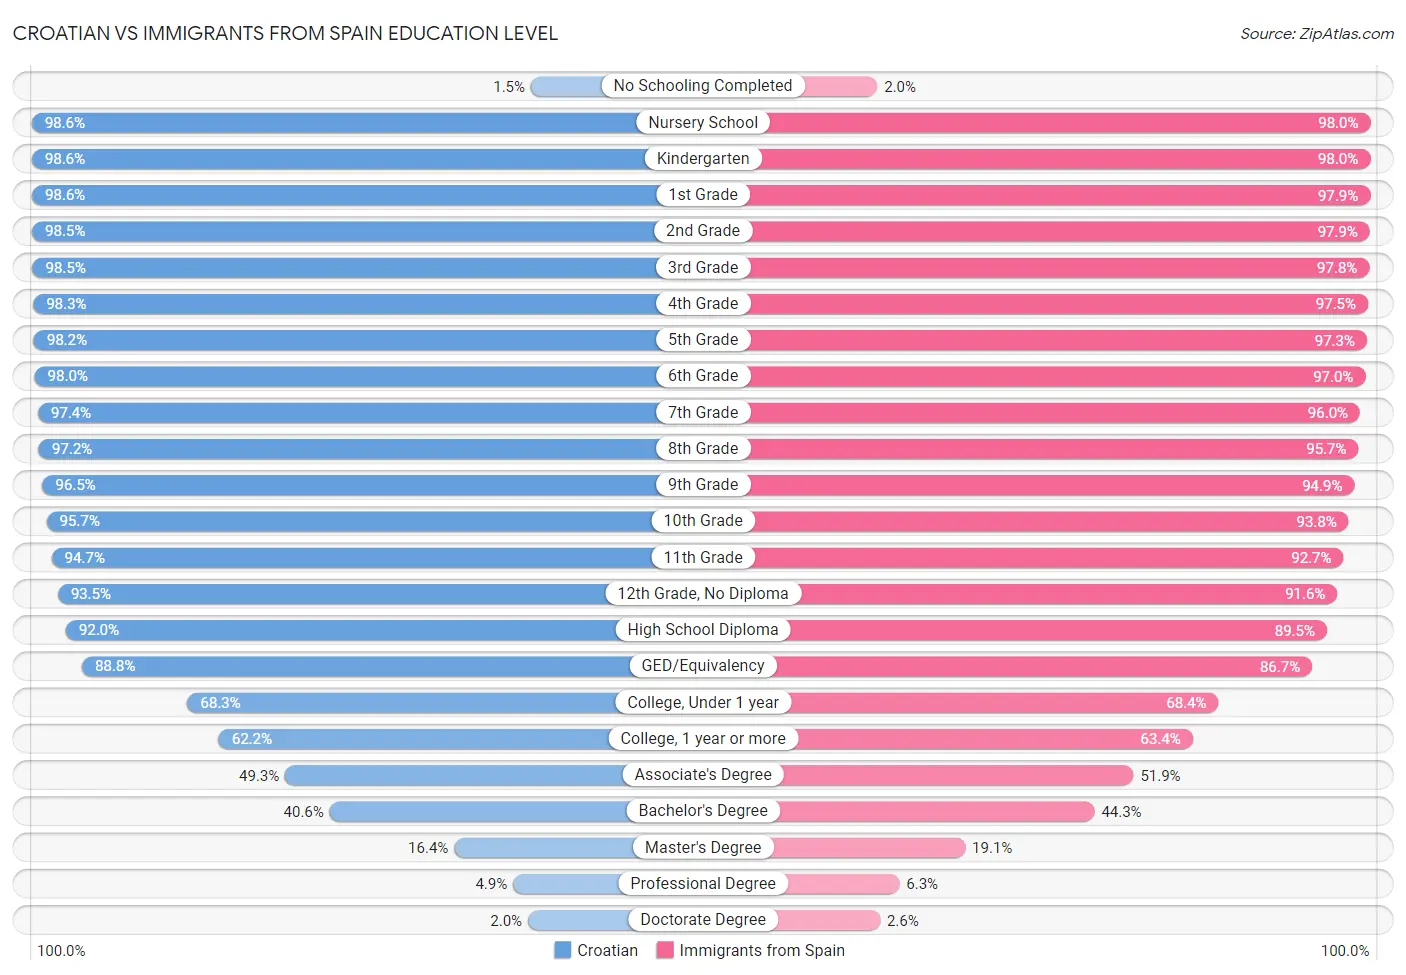 Croatian vs Immigrants from Spain Education Level